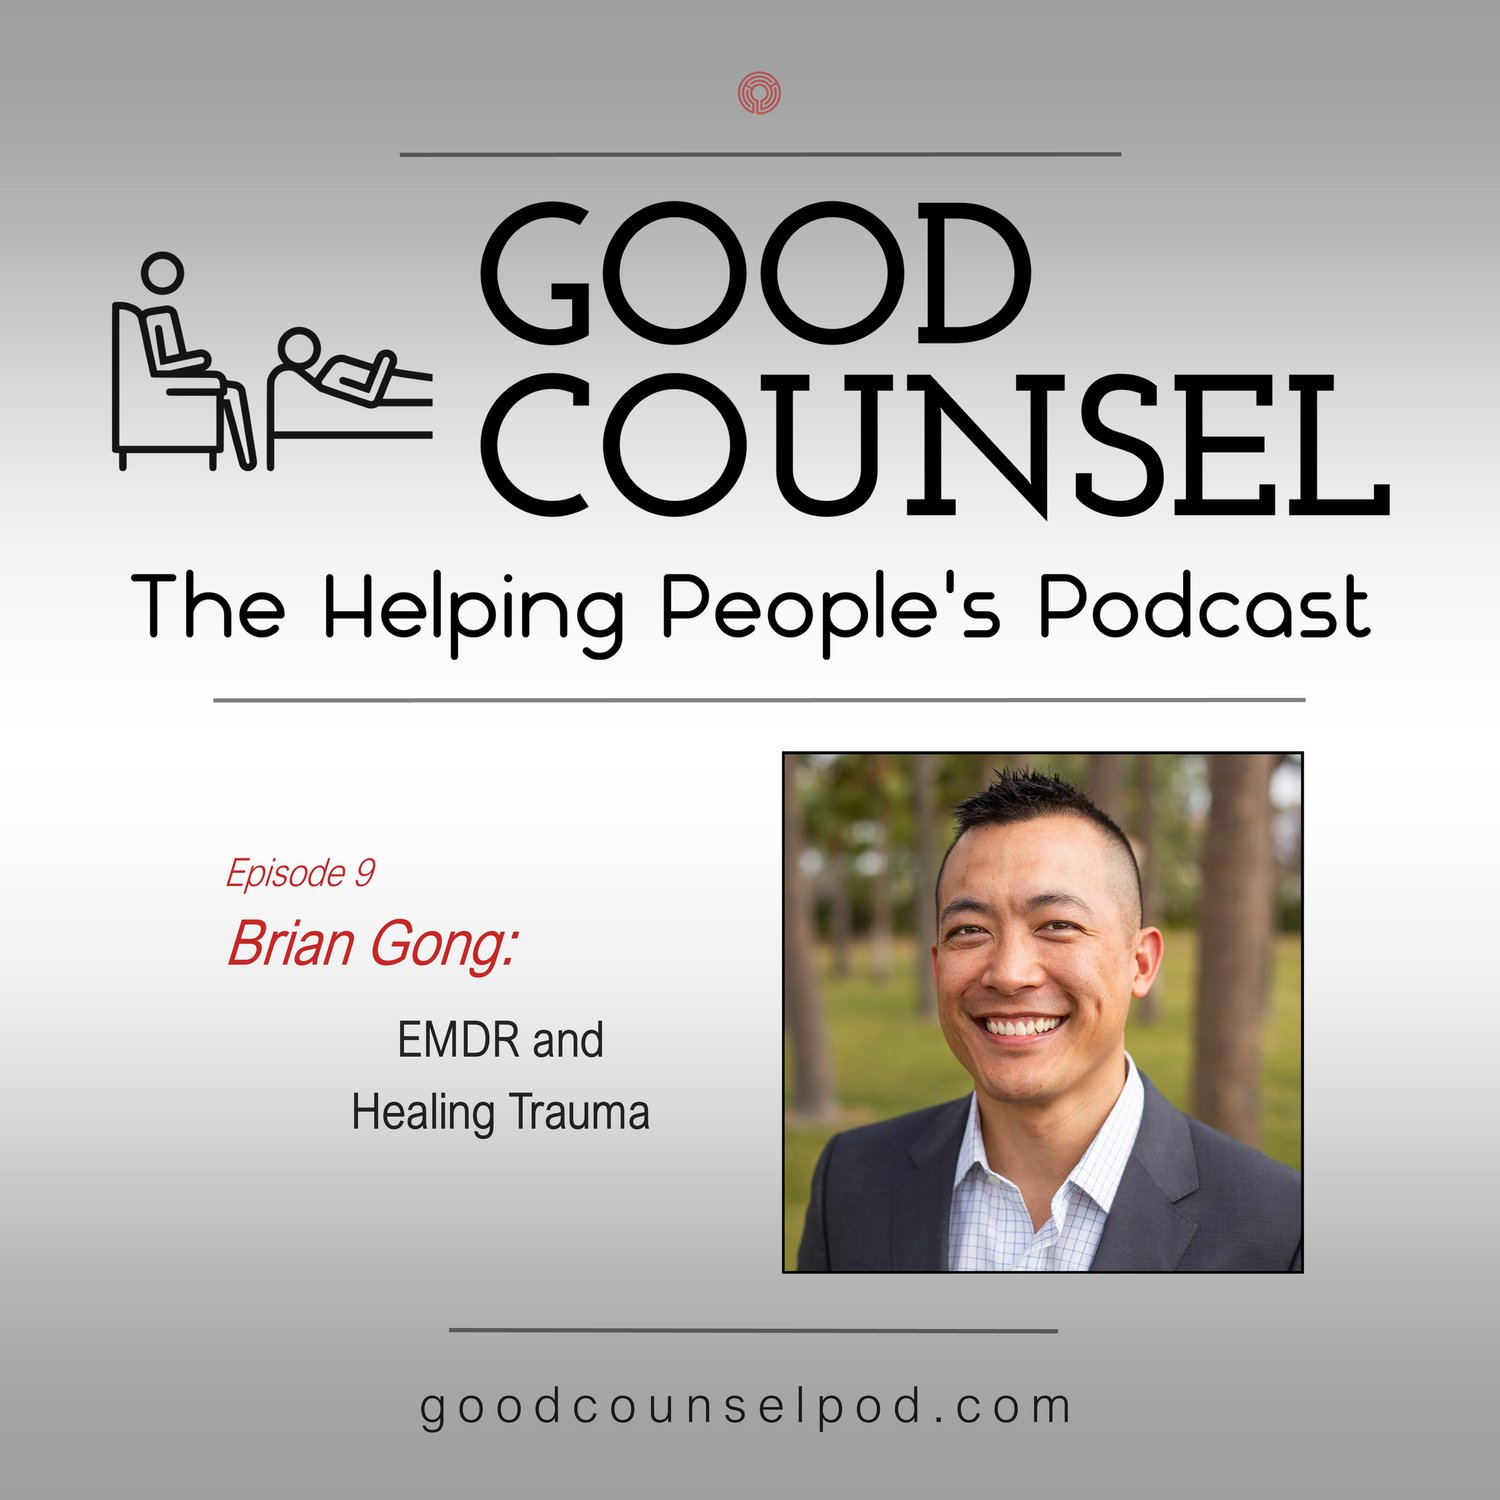 Brian Gong: “EMDR and Healing Trauma”